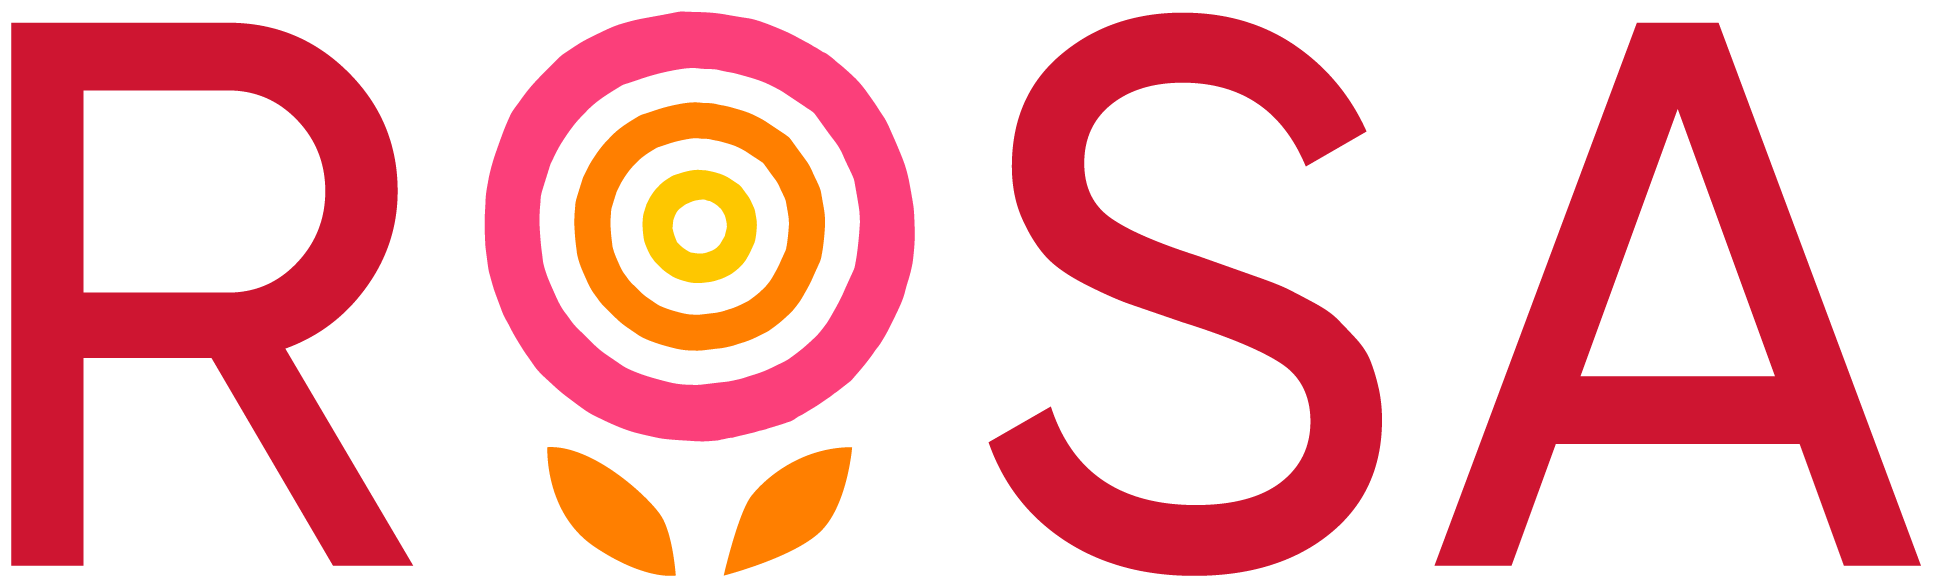 ROSA Foundation logo